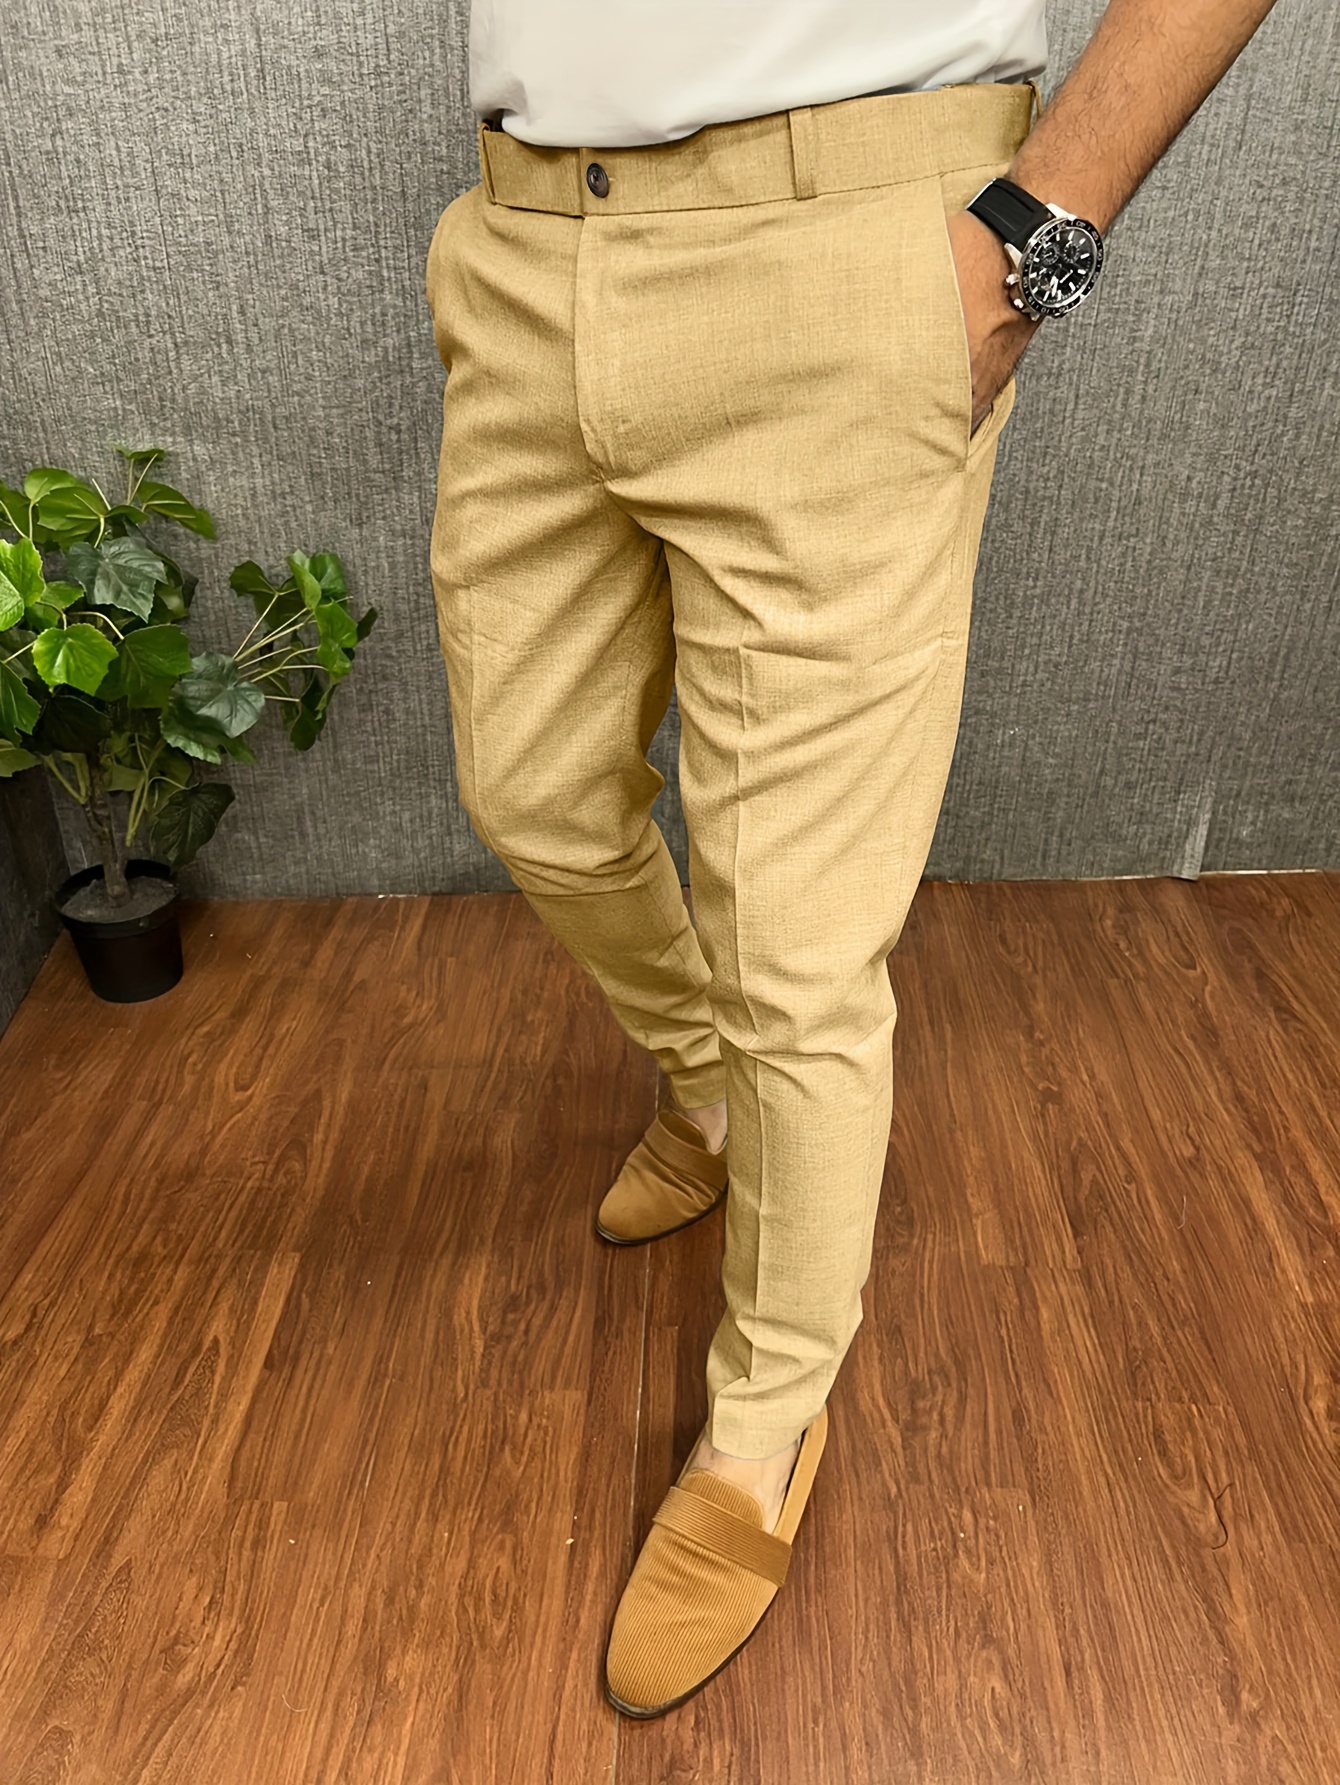 Men's Elegant Slacks, Semi-formal Dress Pants For Business Banquet